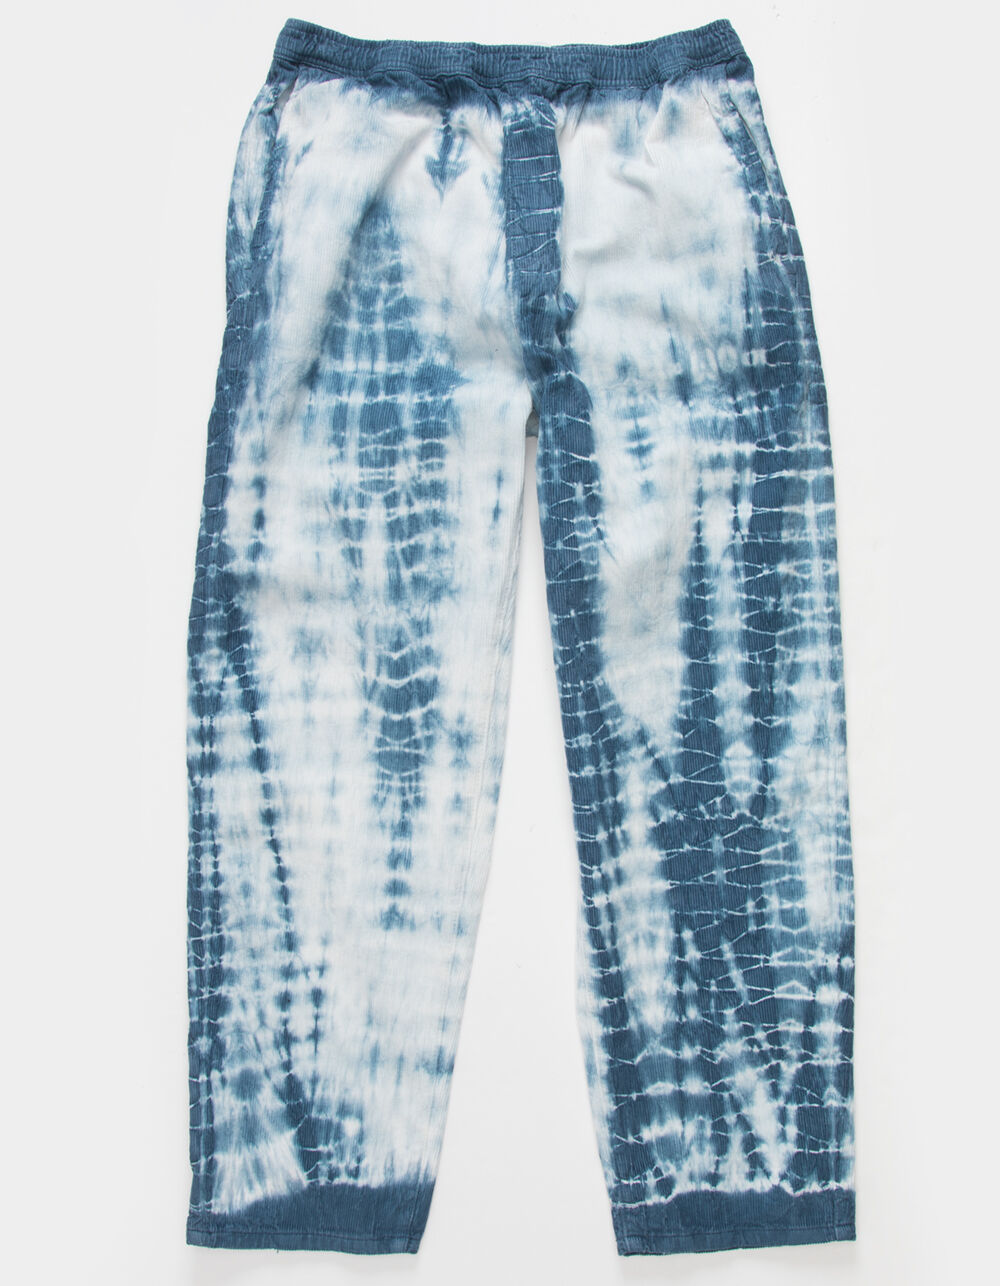 BDG Urban Outfitters PJ Mens Tie-Dye Pants - BLUE / WHITE | Tillys